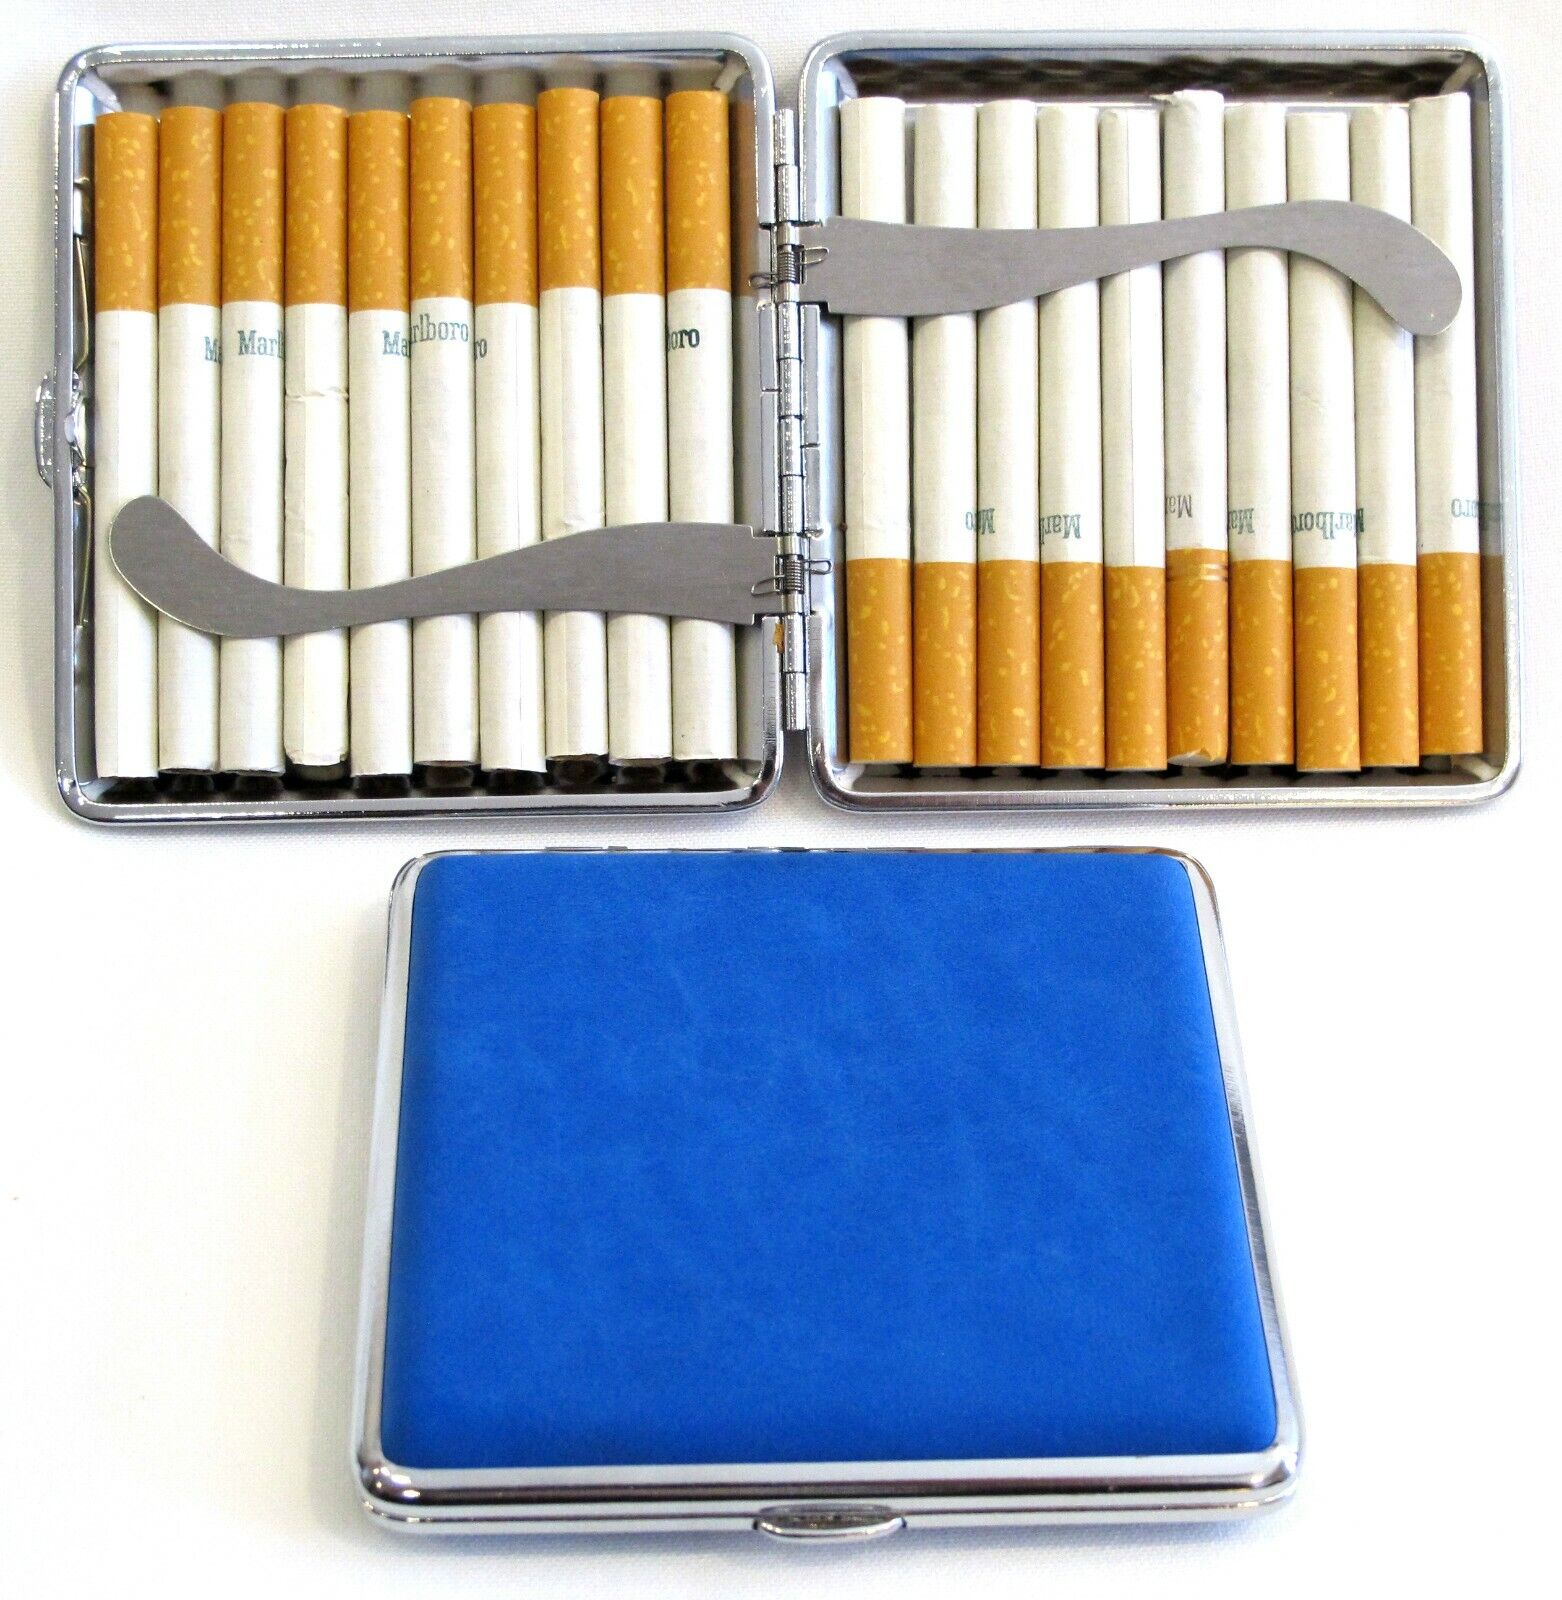 2pc Set Stainless Steel Cigarette Case Hold 20pc Regular Size 84s - BLUE + BLACK Без бренда